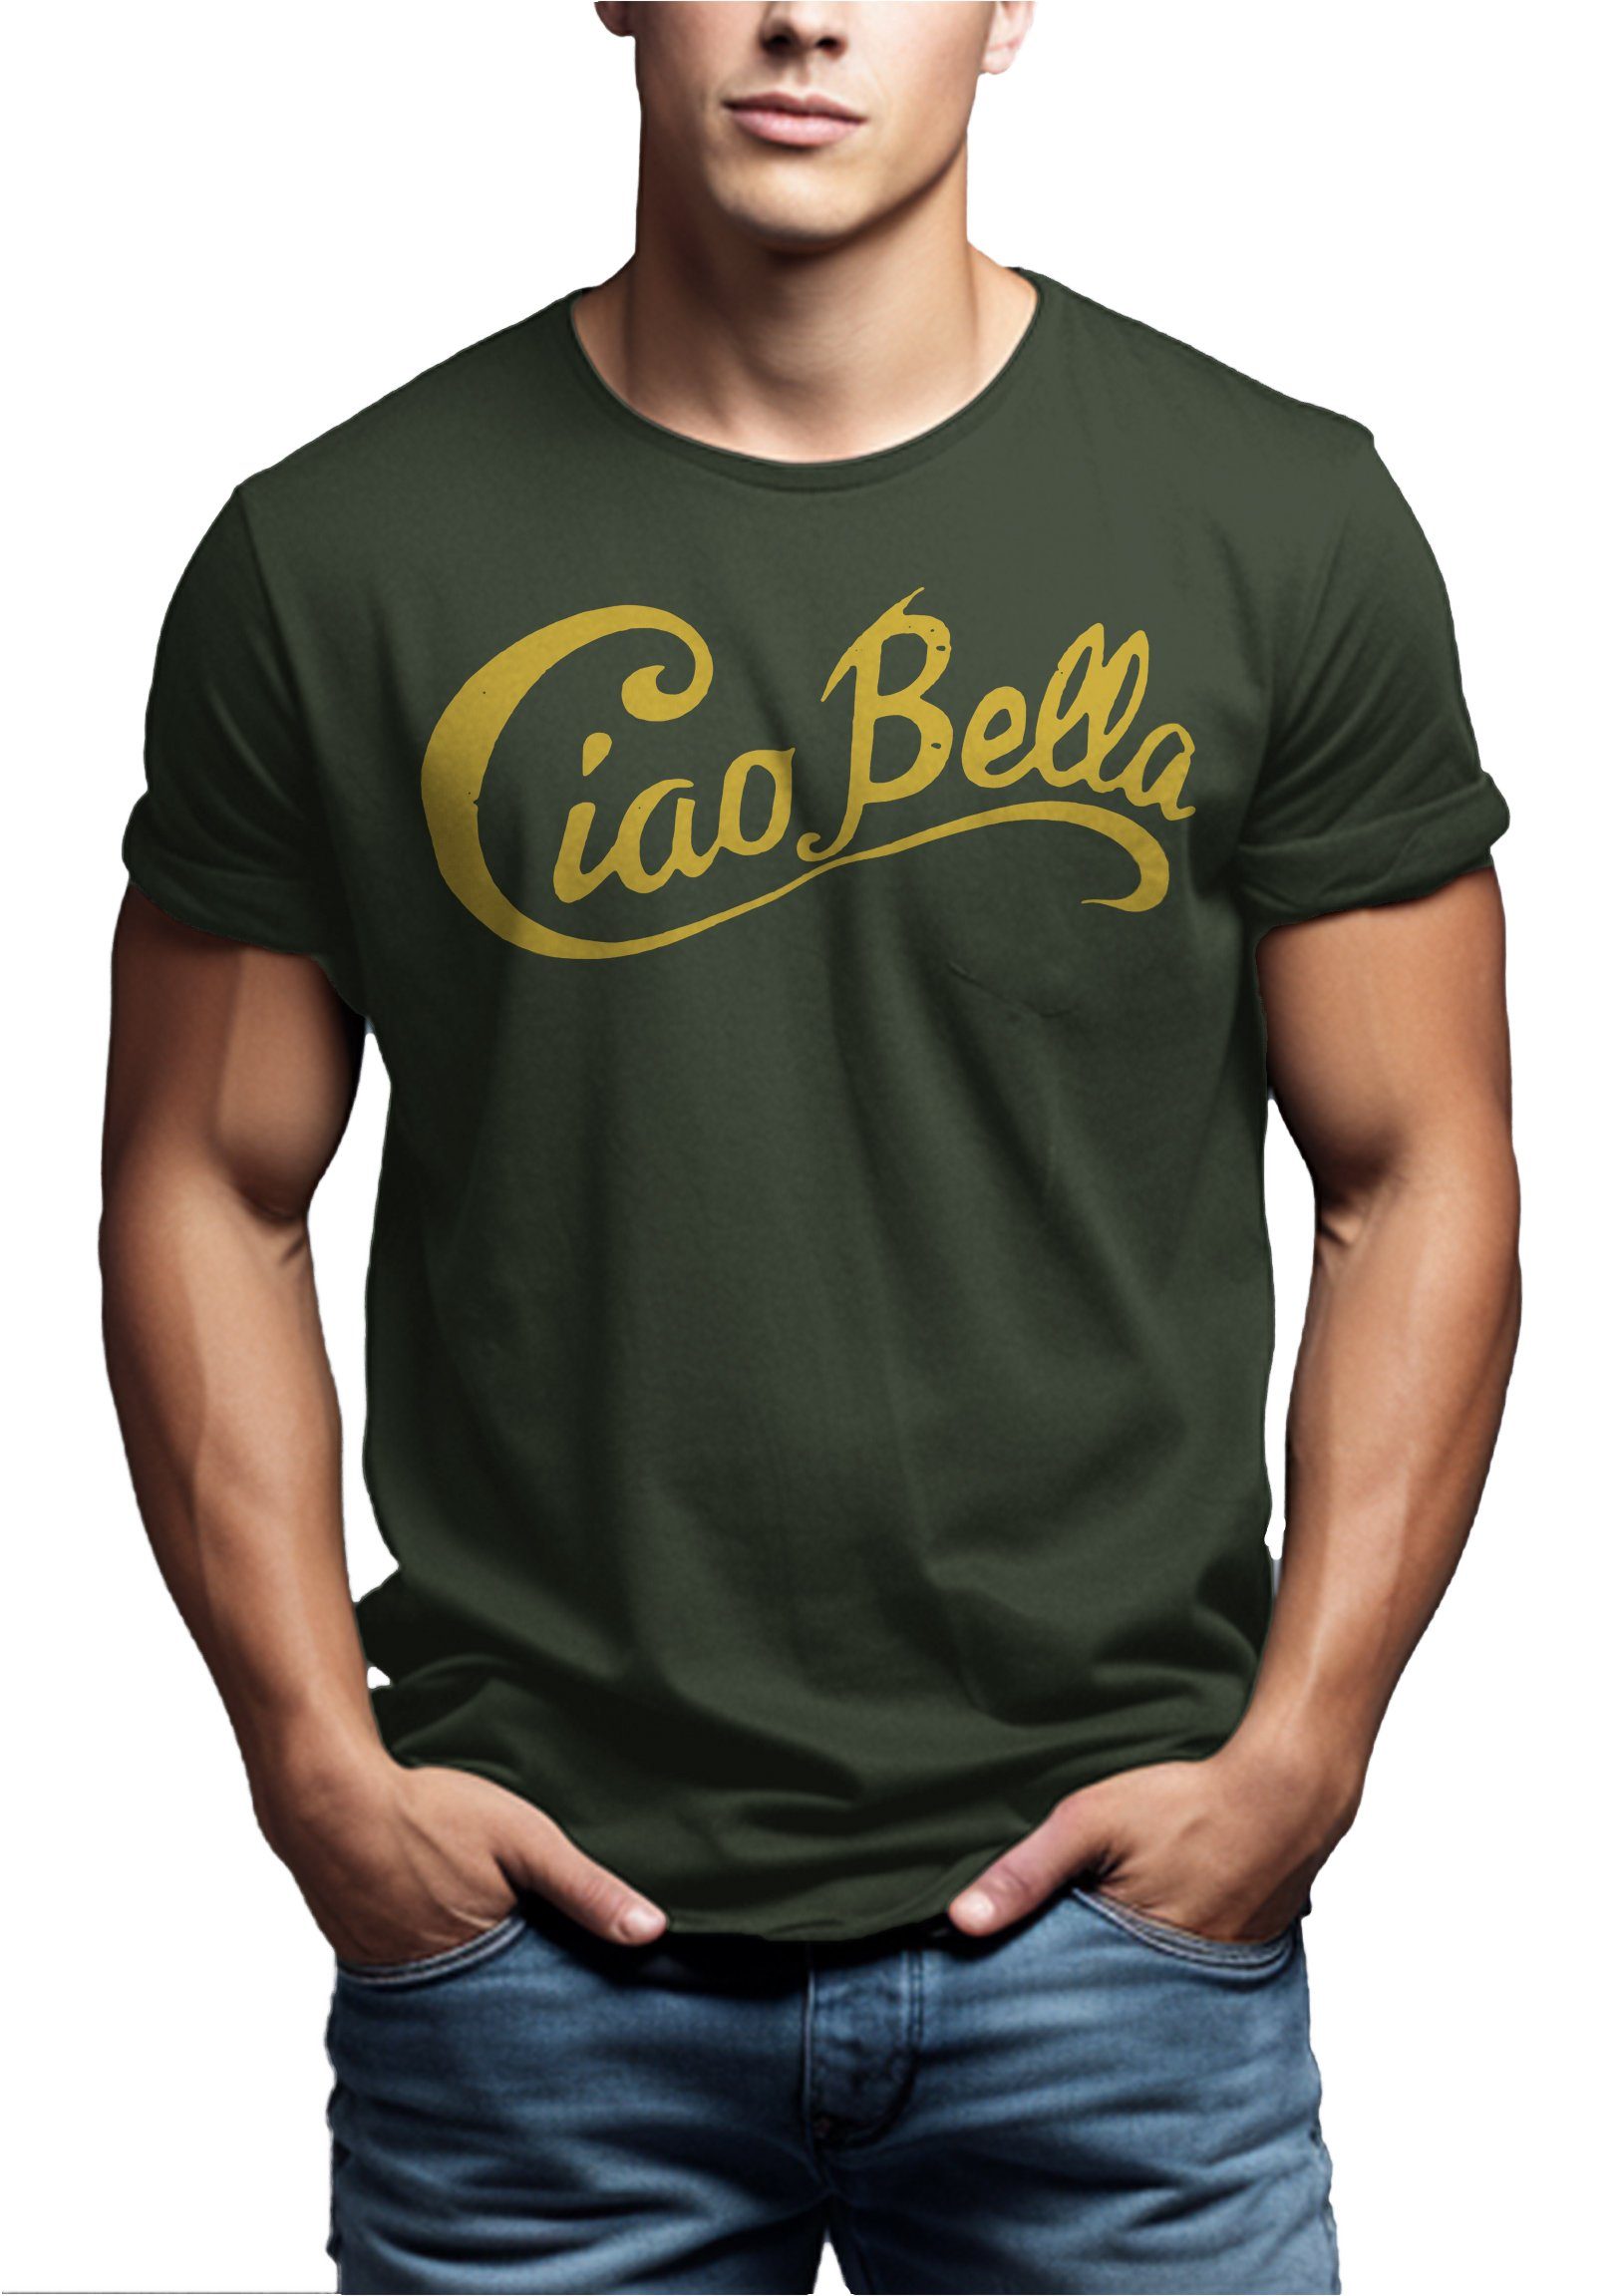 MAKAYA Coole Herren Italienischer Bella Logo, Motiv Style Ciao Spruch Mode Grün Print-Shirt Italien